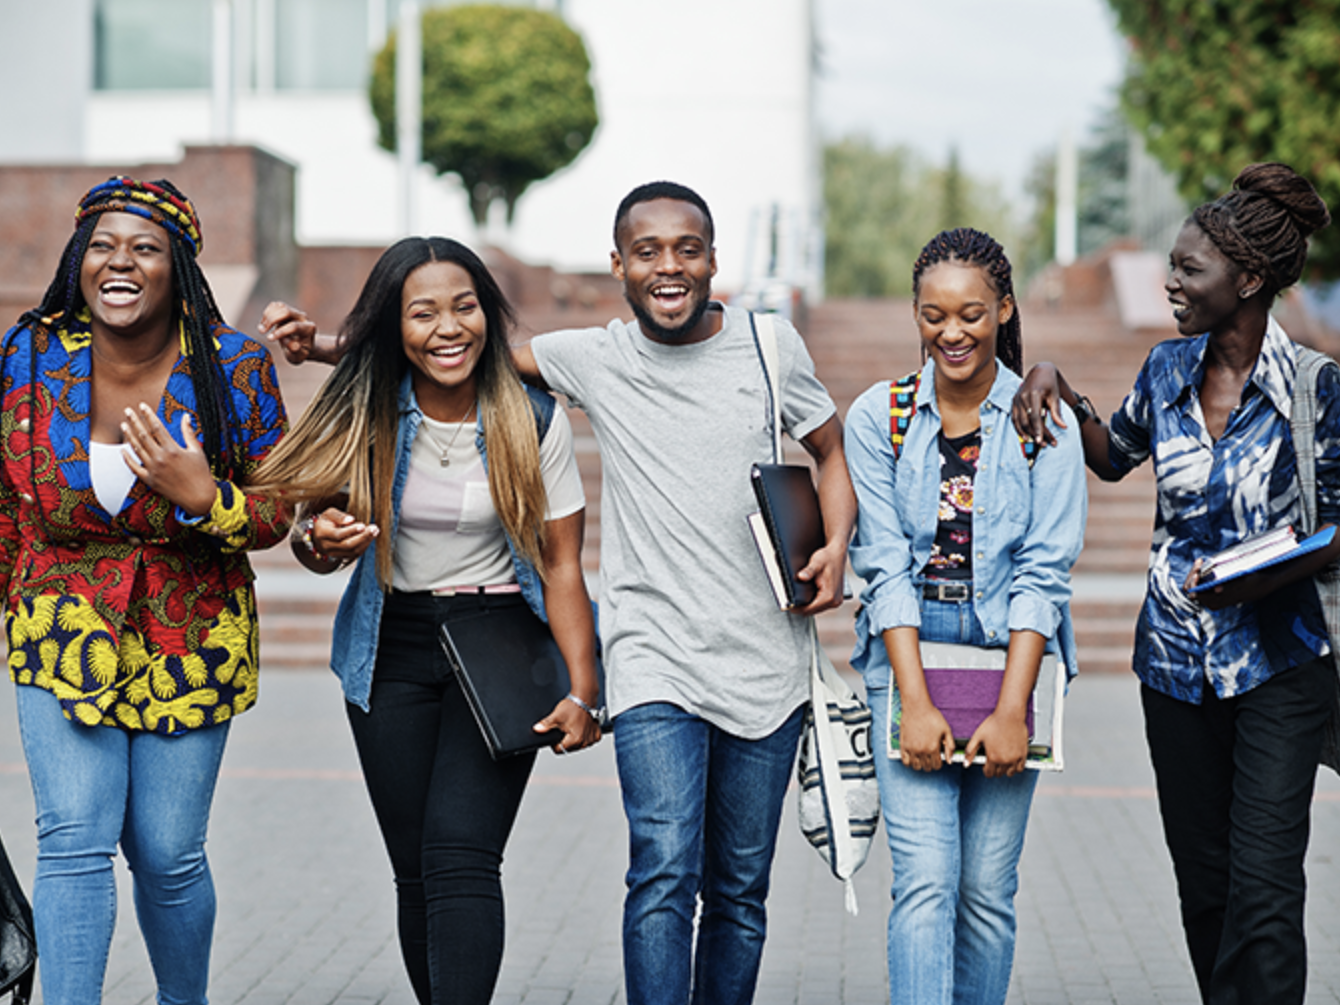 Group of 5 black students smiling together